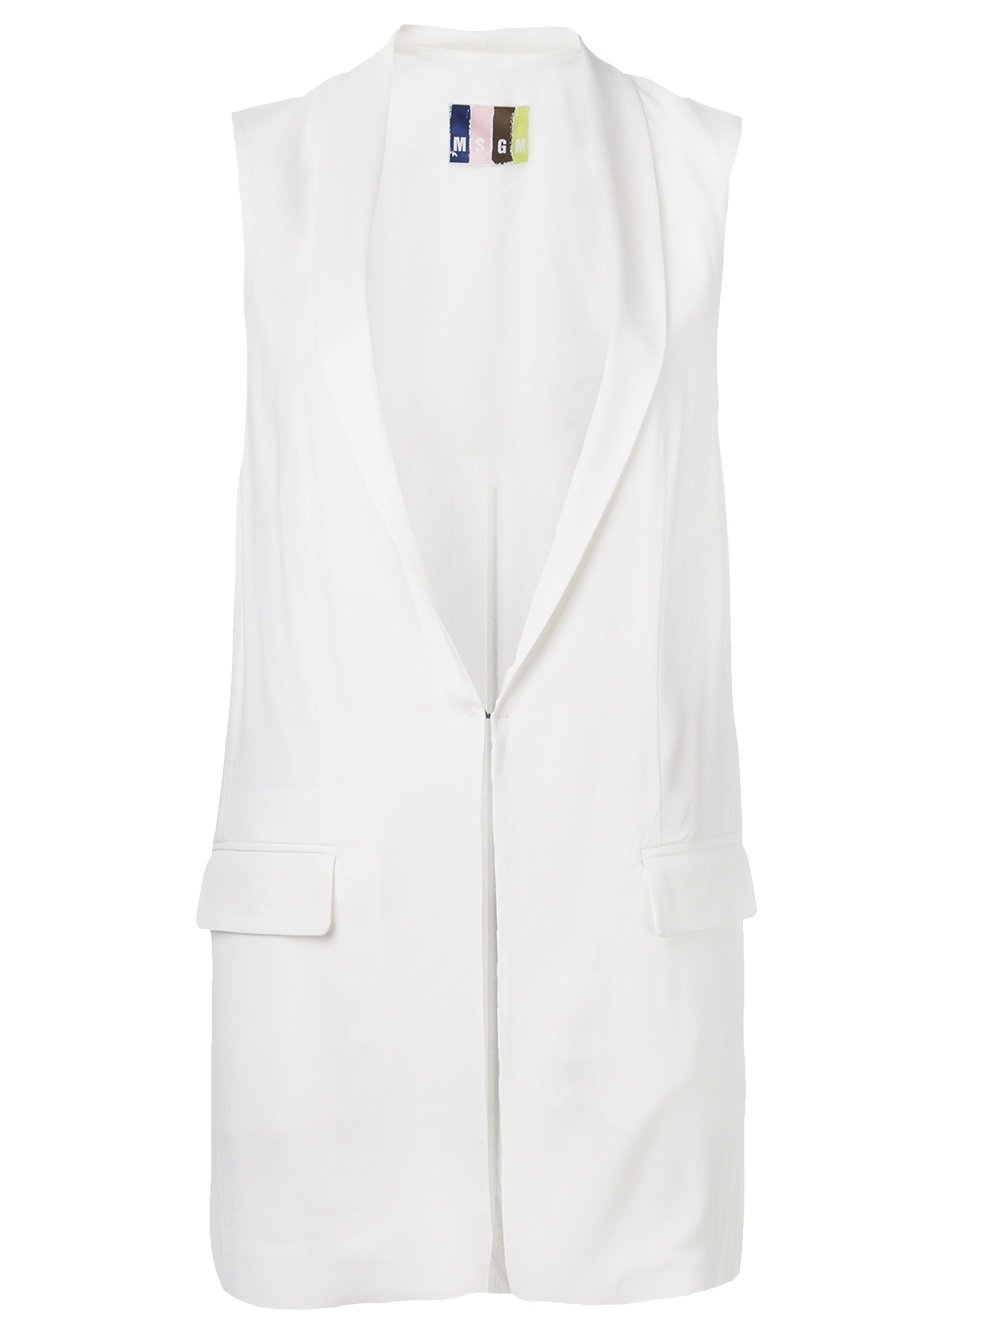 Msgm Sleeveless Vest in White | Lyst